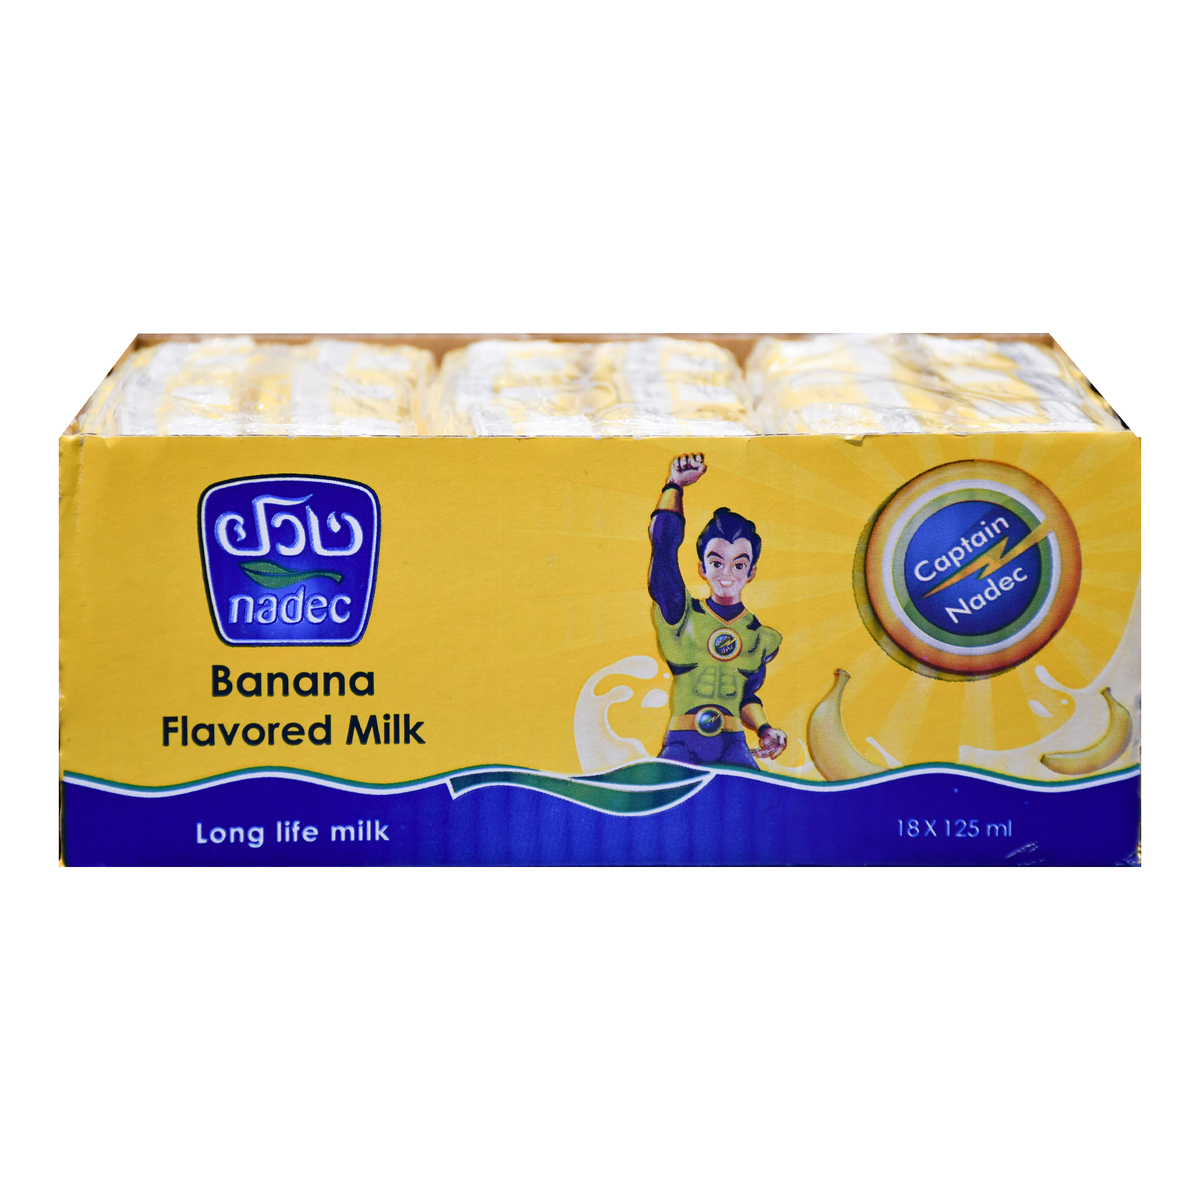 Nadec UHT Banana Flavored Milk 18 x 125 ml